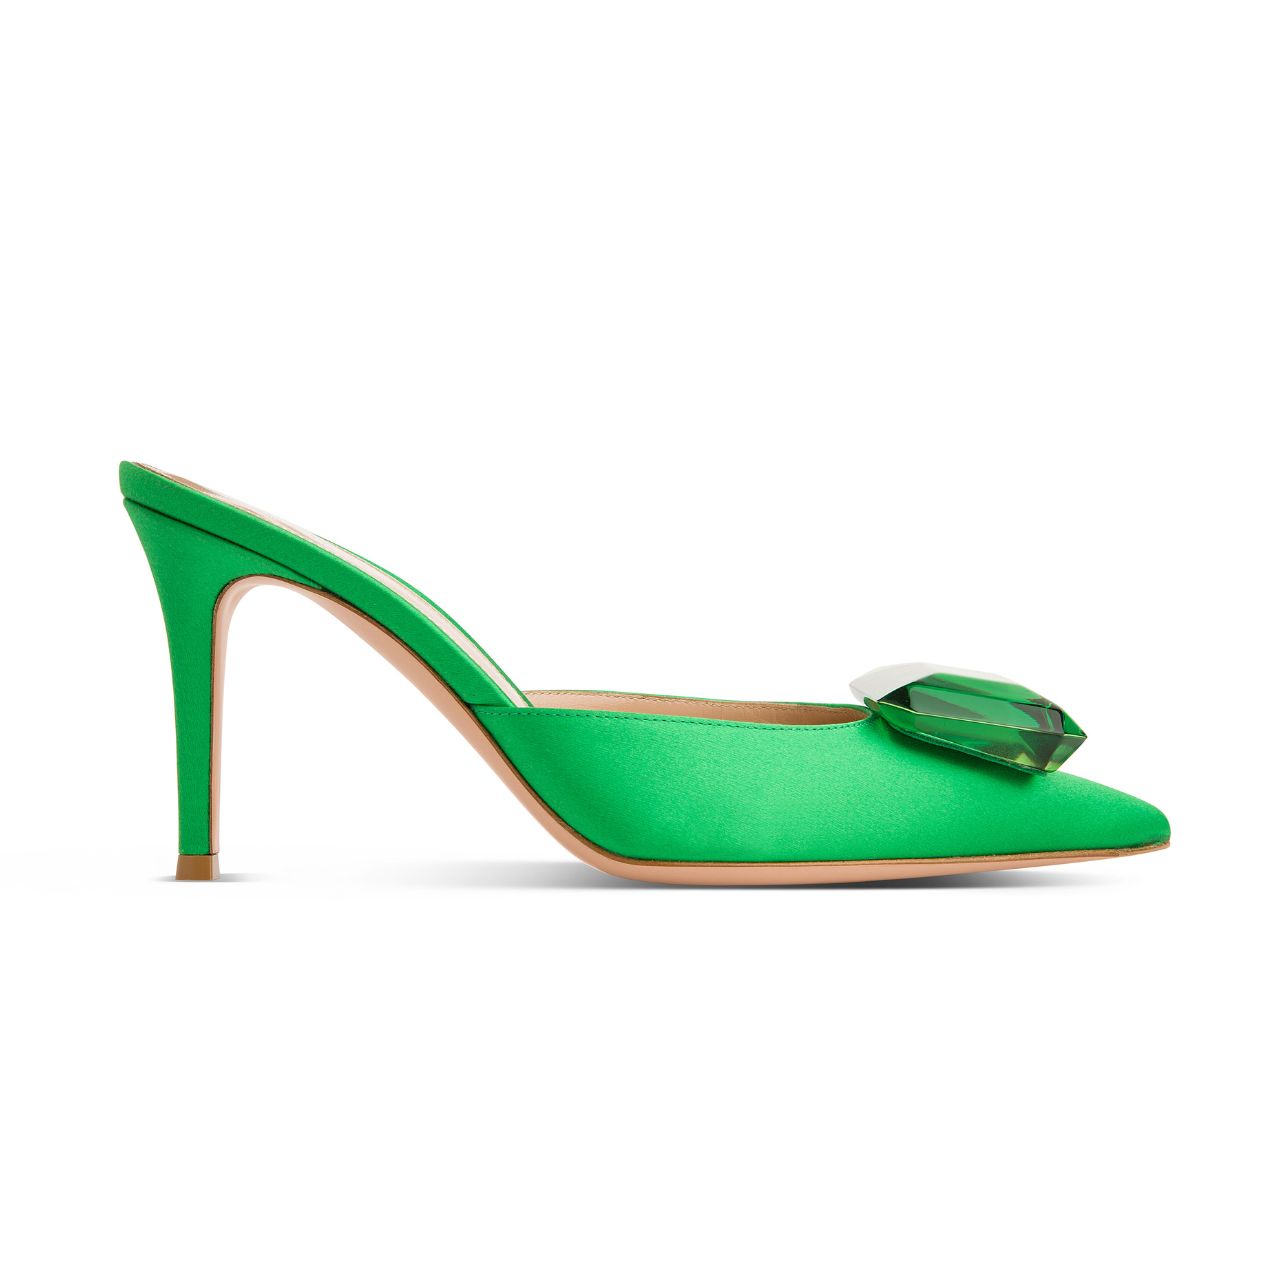 Green satin mule heels with an emerald cut gemstone